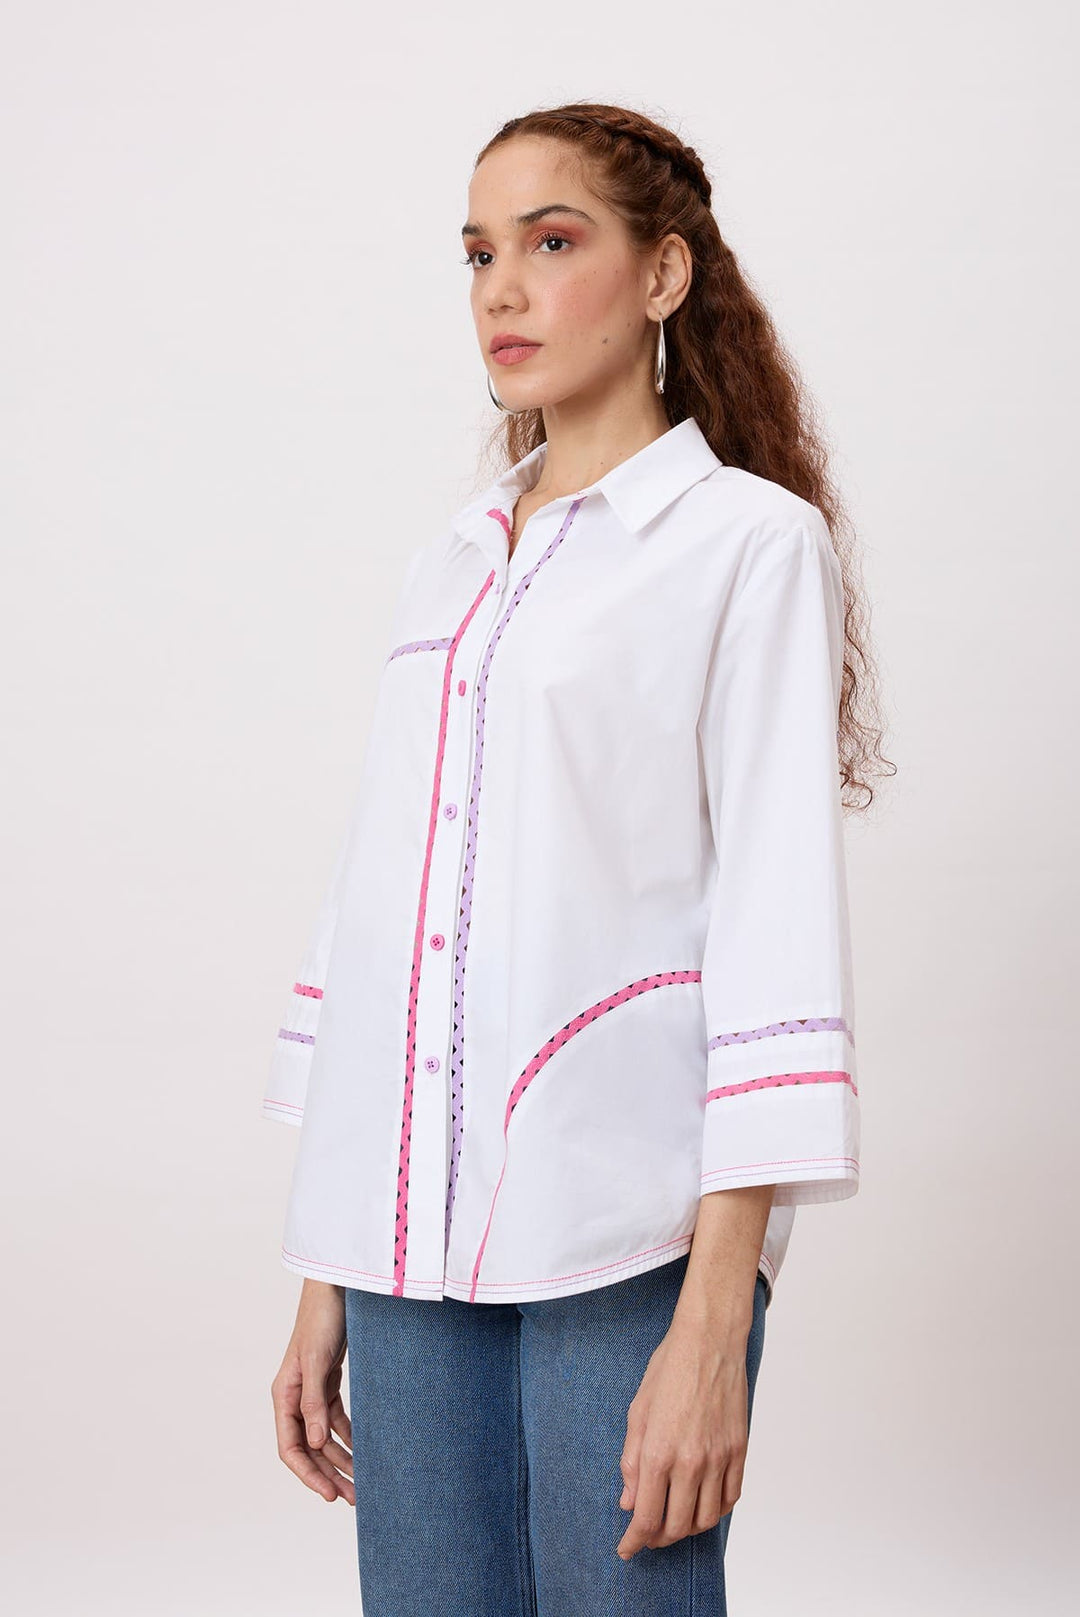 Louisa Shirt A classic button-down shirt